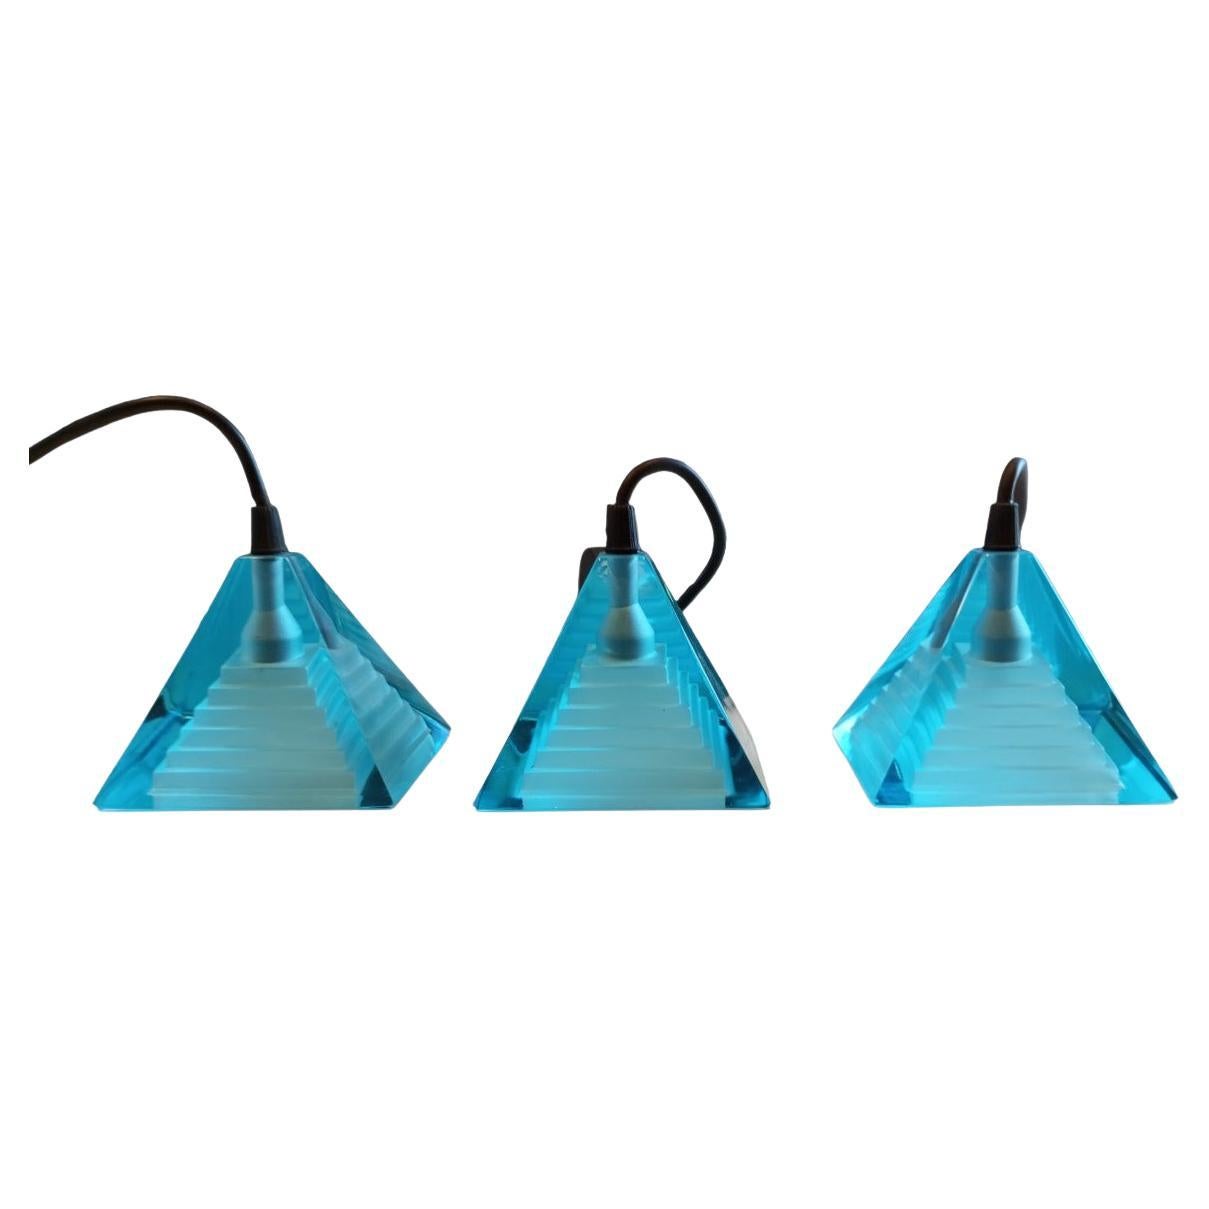 Three blue 'Pyramid' lamps designed by Paolo Piva for Mazzega - Murano glass